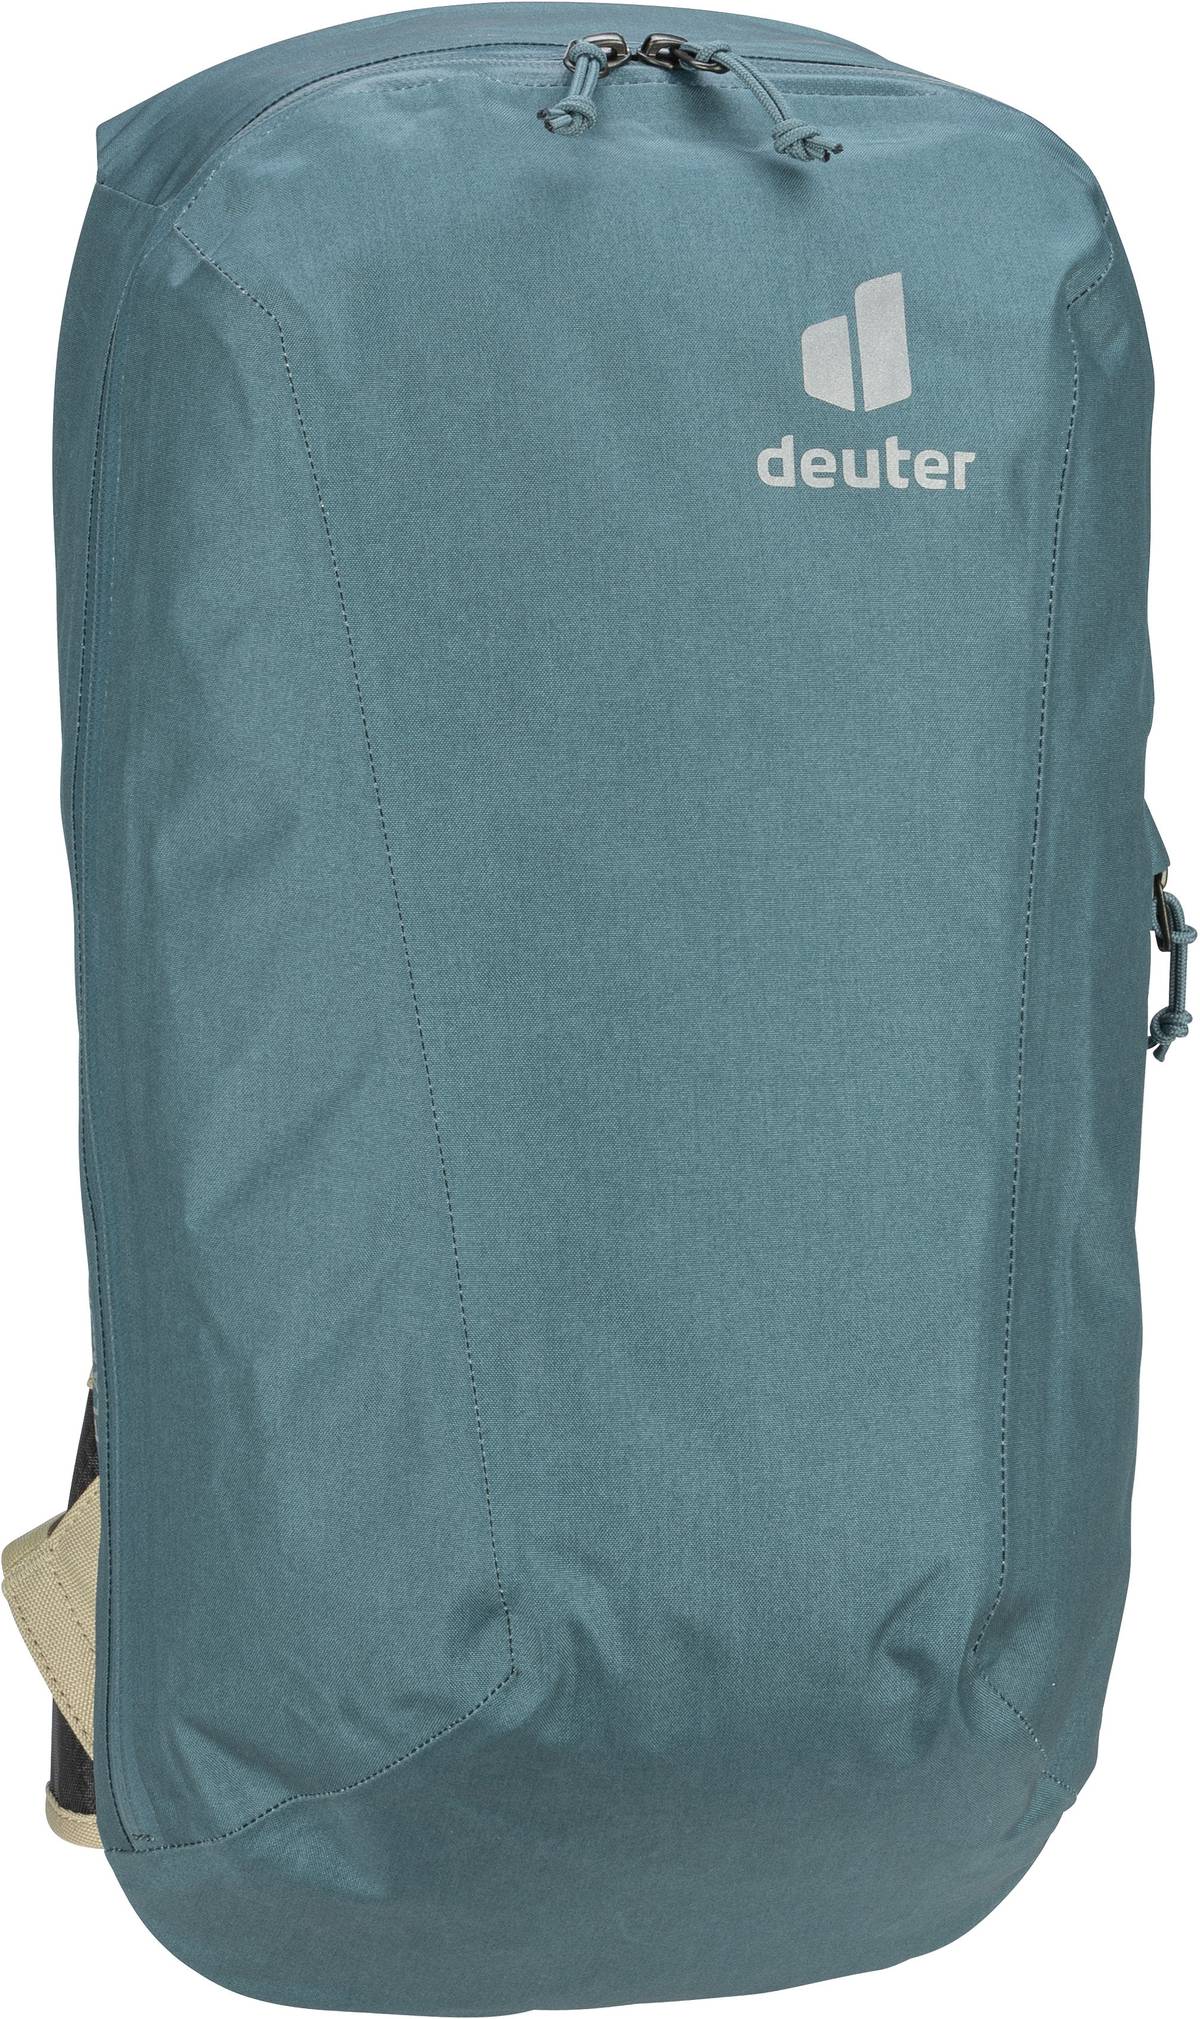 Deuter Deuter Plamort 12 in Petrol (12 Liter), Rucksack / Backpack